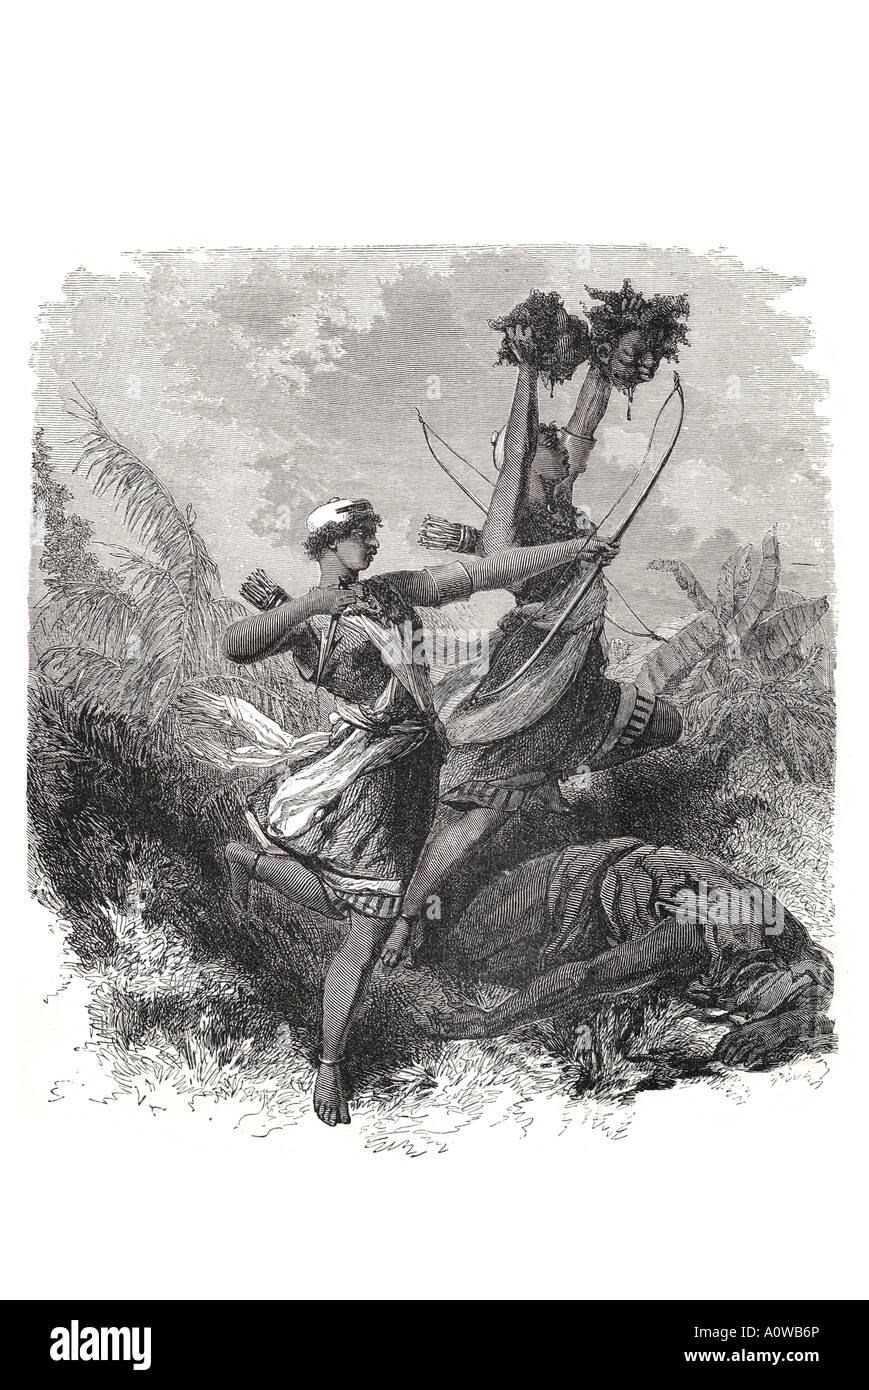 Amazonas de Dahomey, batalla femenino las mujeres soldado flecha arco guerrero feroz lucha valiente Benin África selva matar matar intrépido decapitar d Foto de stock